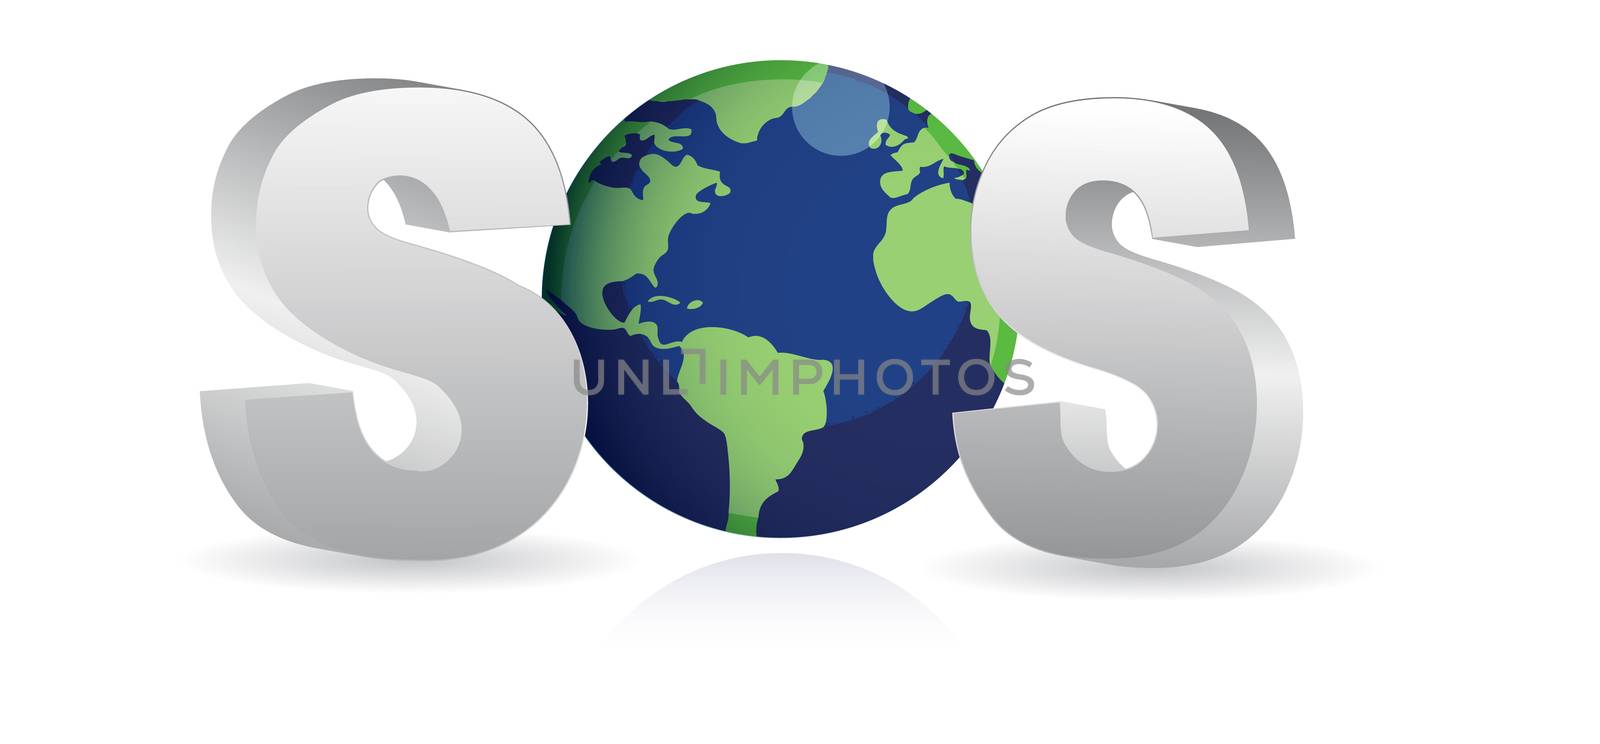 SOS - Save the Earth. by alexmillos